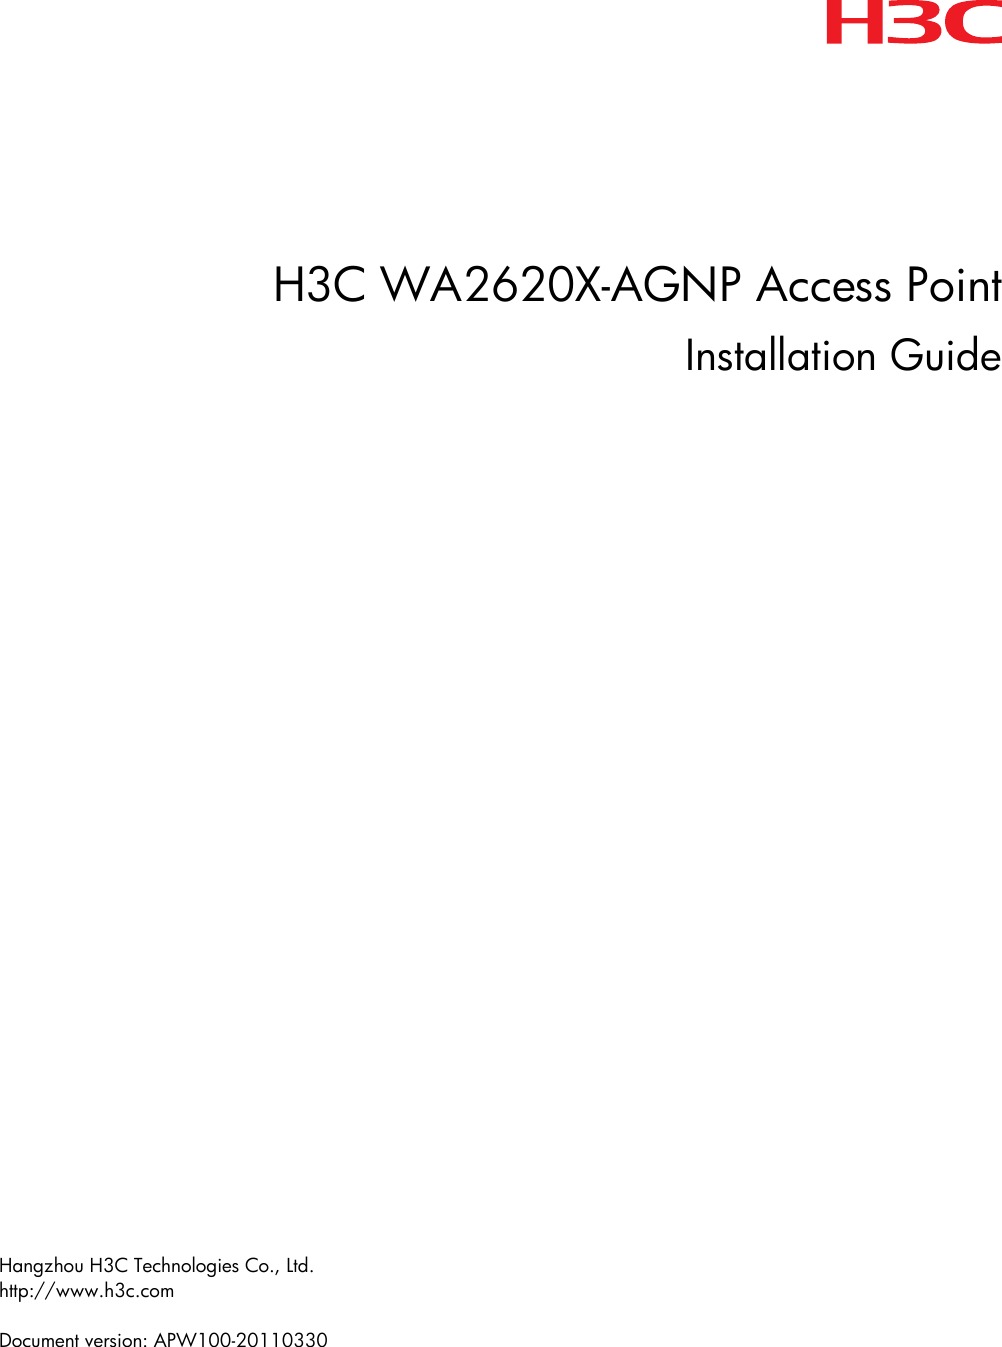   H3C WA2620X-AGNP Access Point Installation Guide                          Hangzhou H3C Technologies Co., Ltd.  http://www.h3c.com  Document version: APW100-20110330 